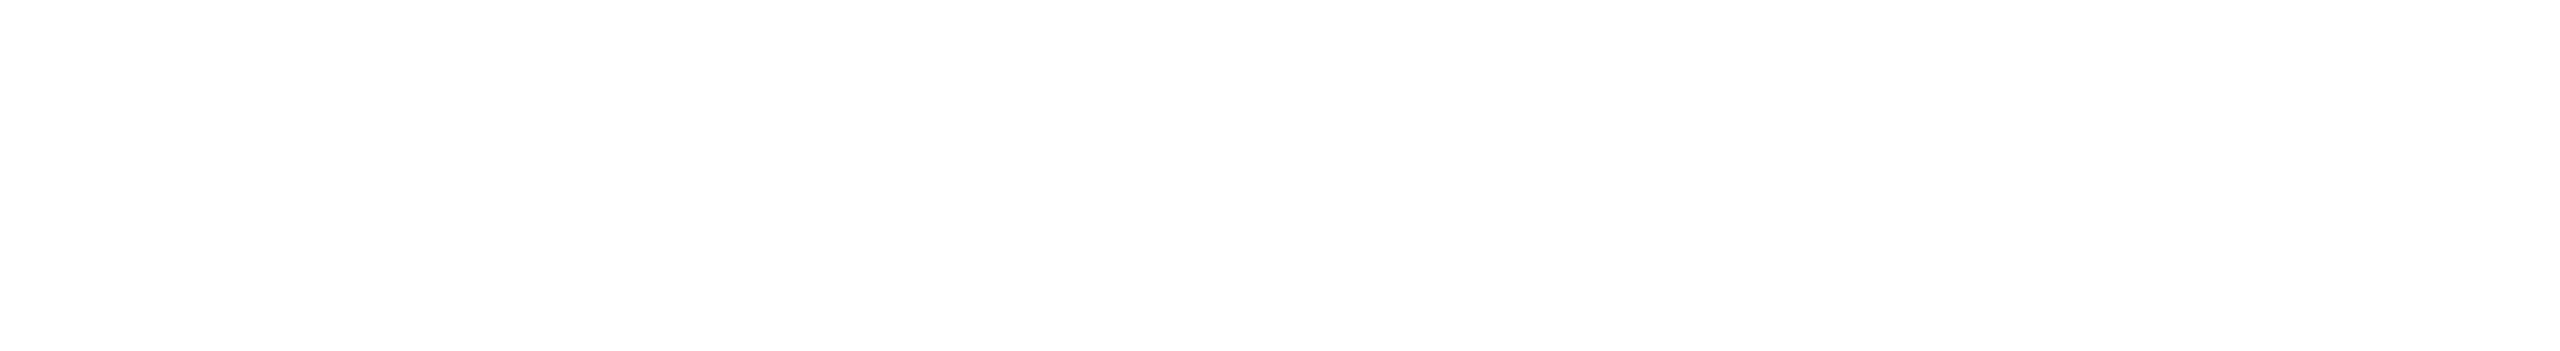 Logo Bundles Deals   White